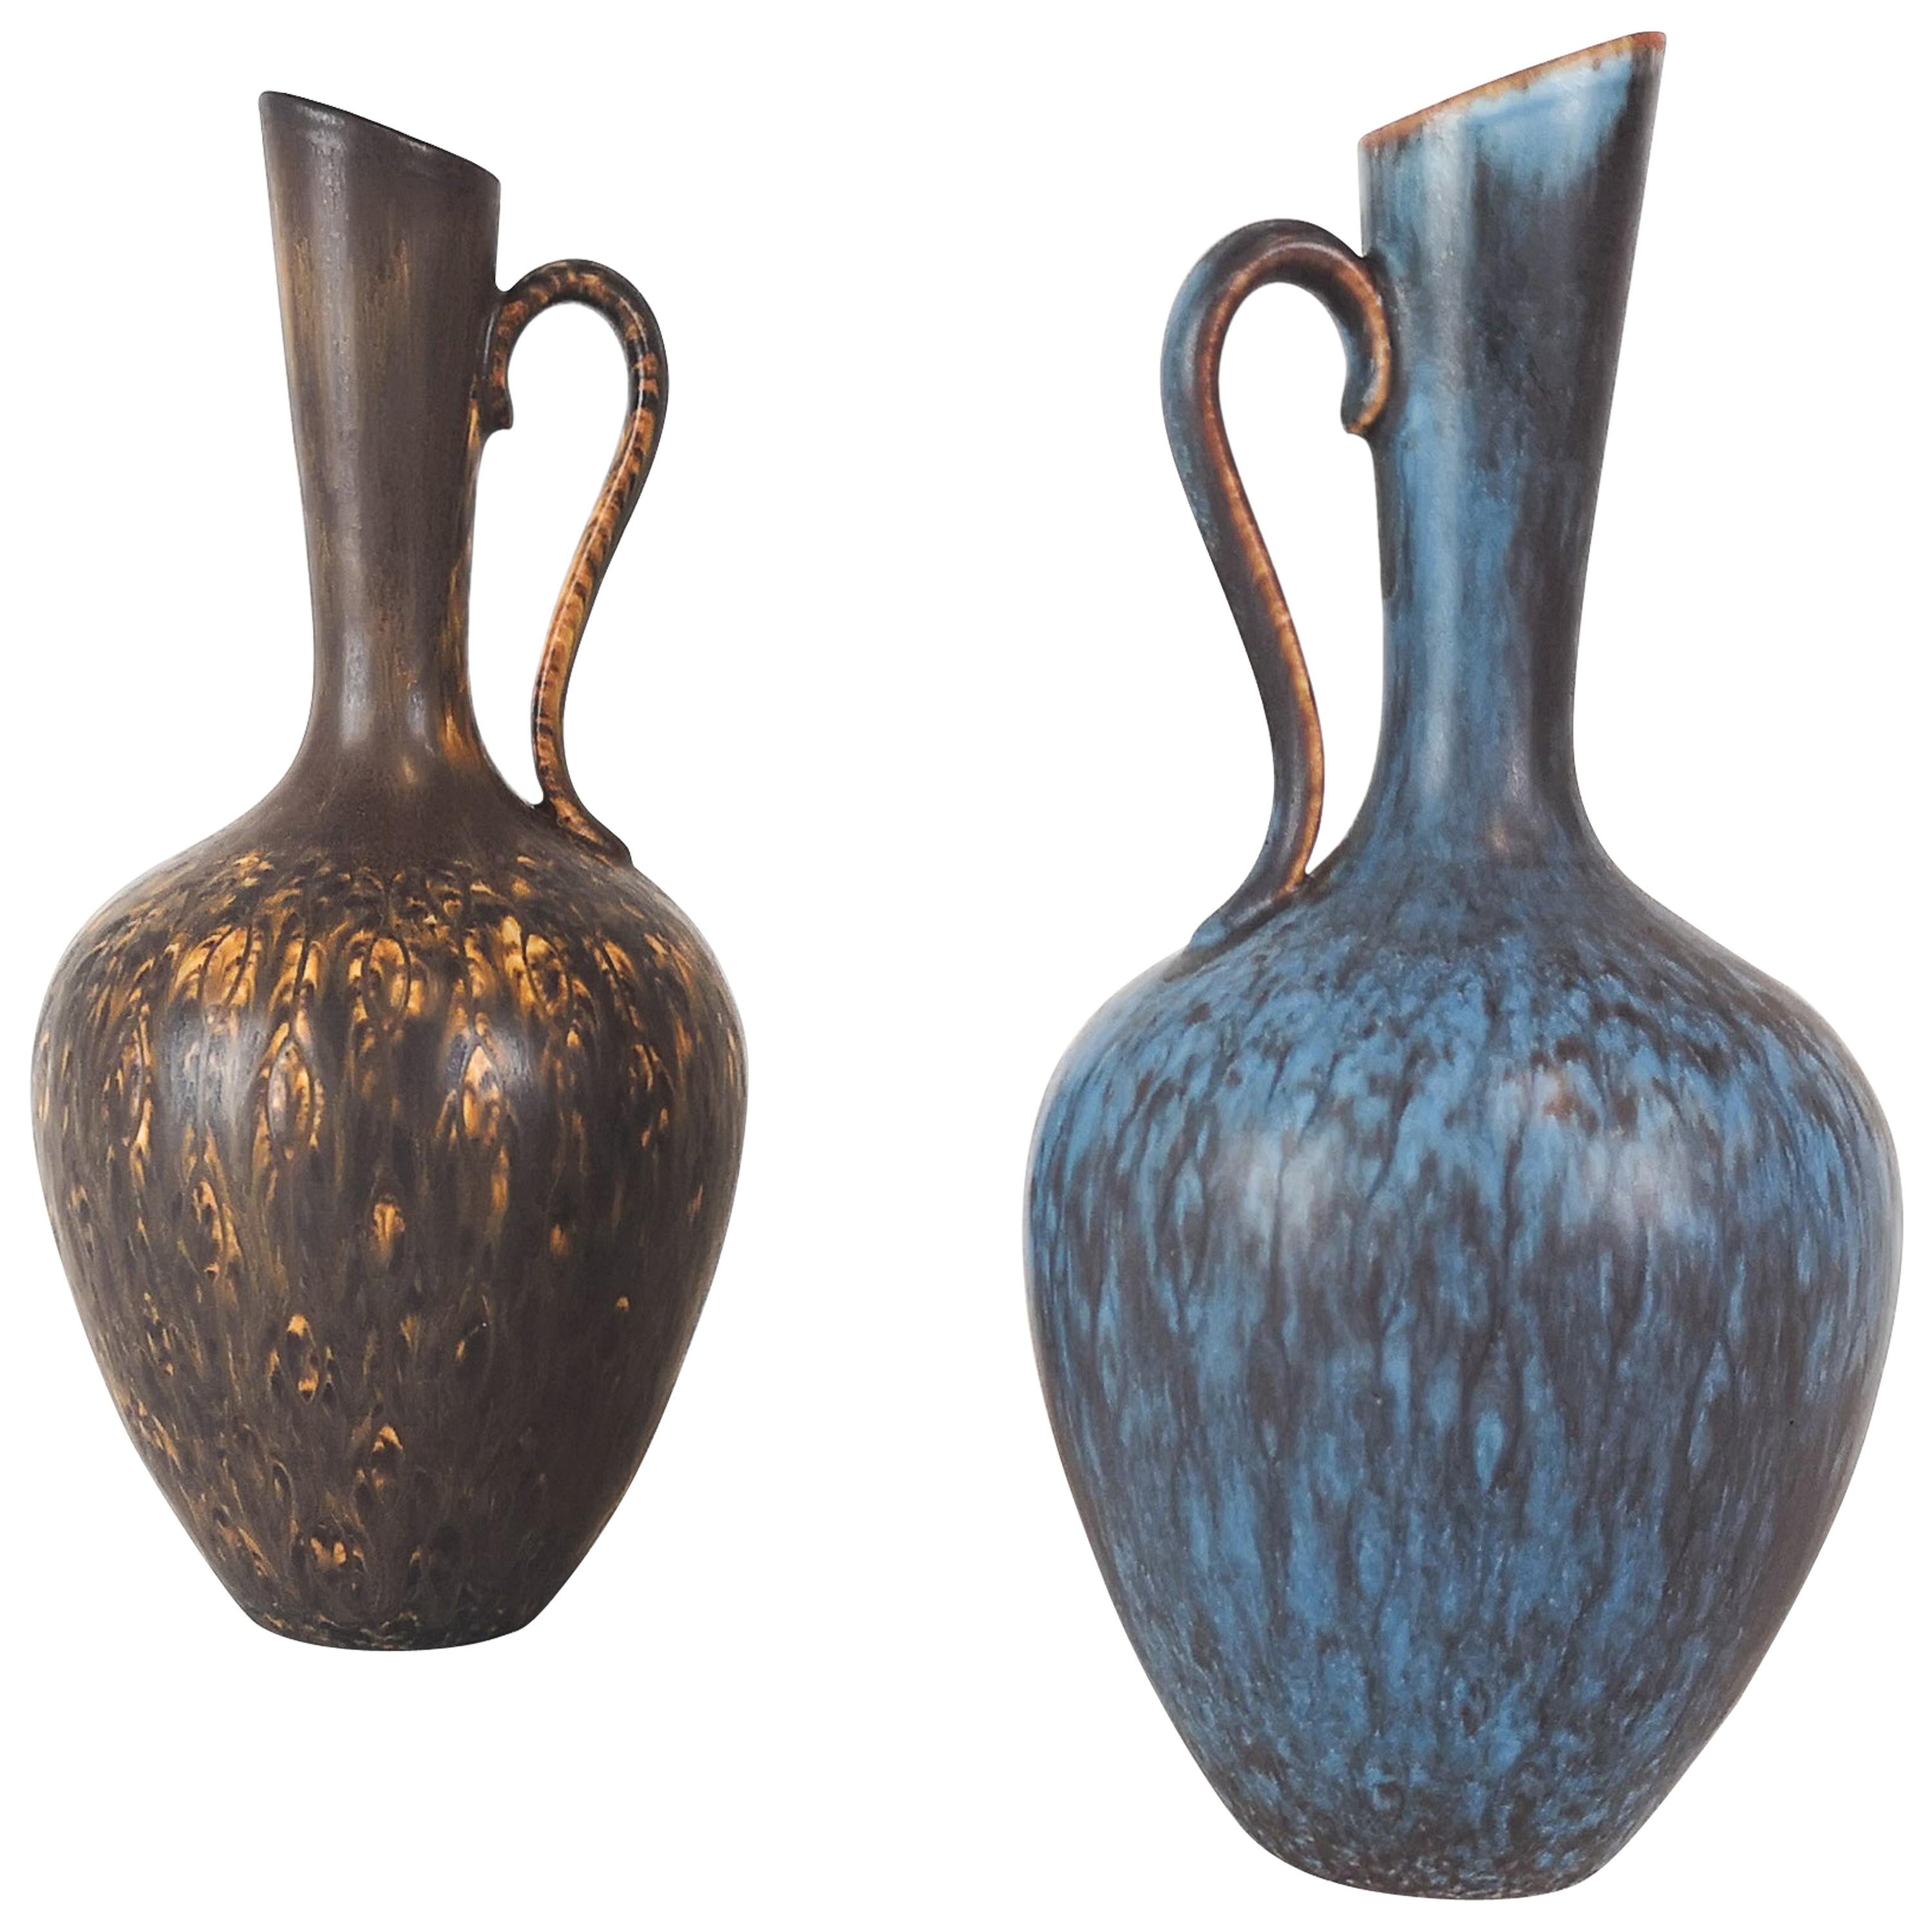 Set of 2 Ceramic Vases Rörstrand Gunnar Nylund, Sweden